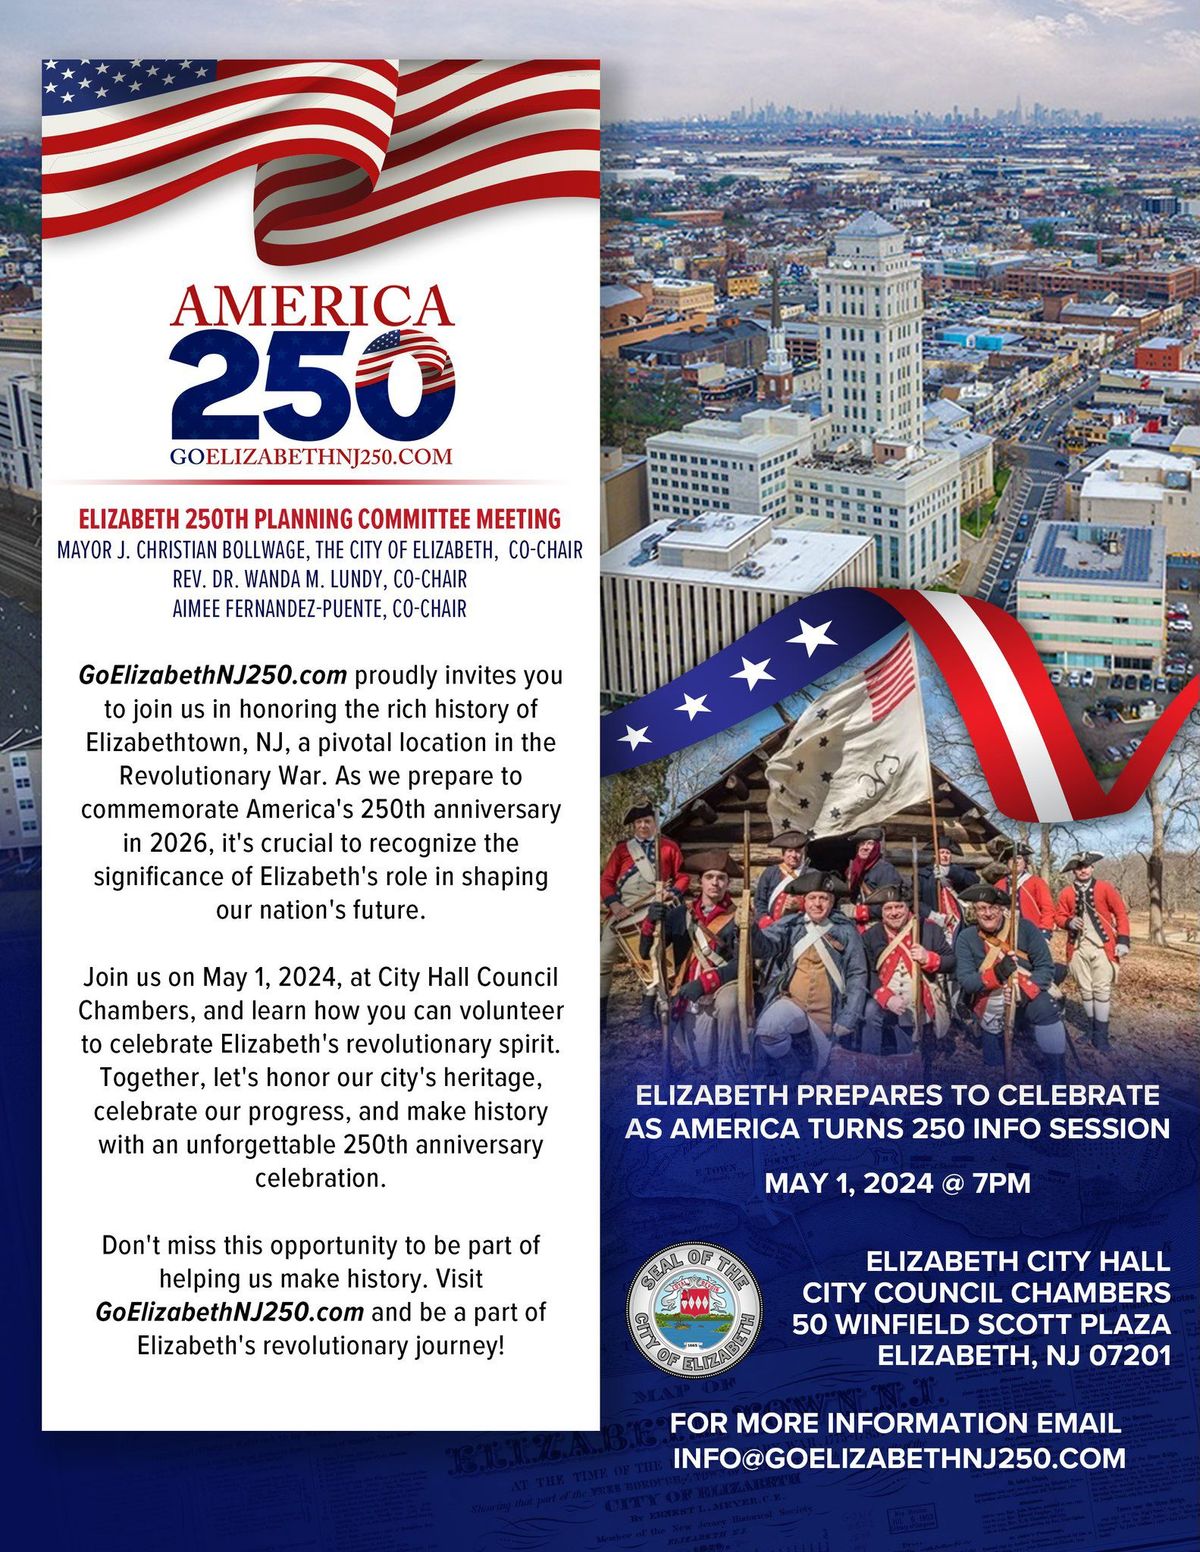 America Turns 250 Info Session